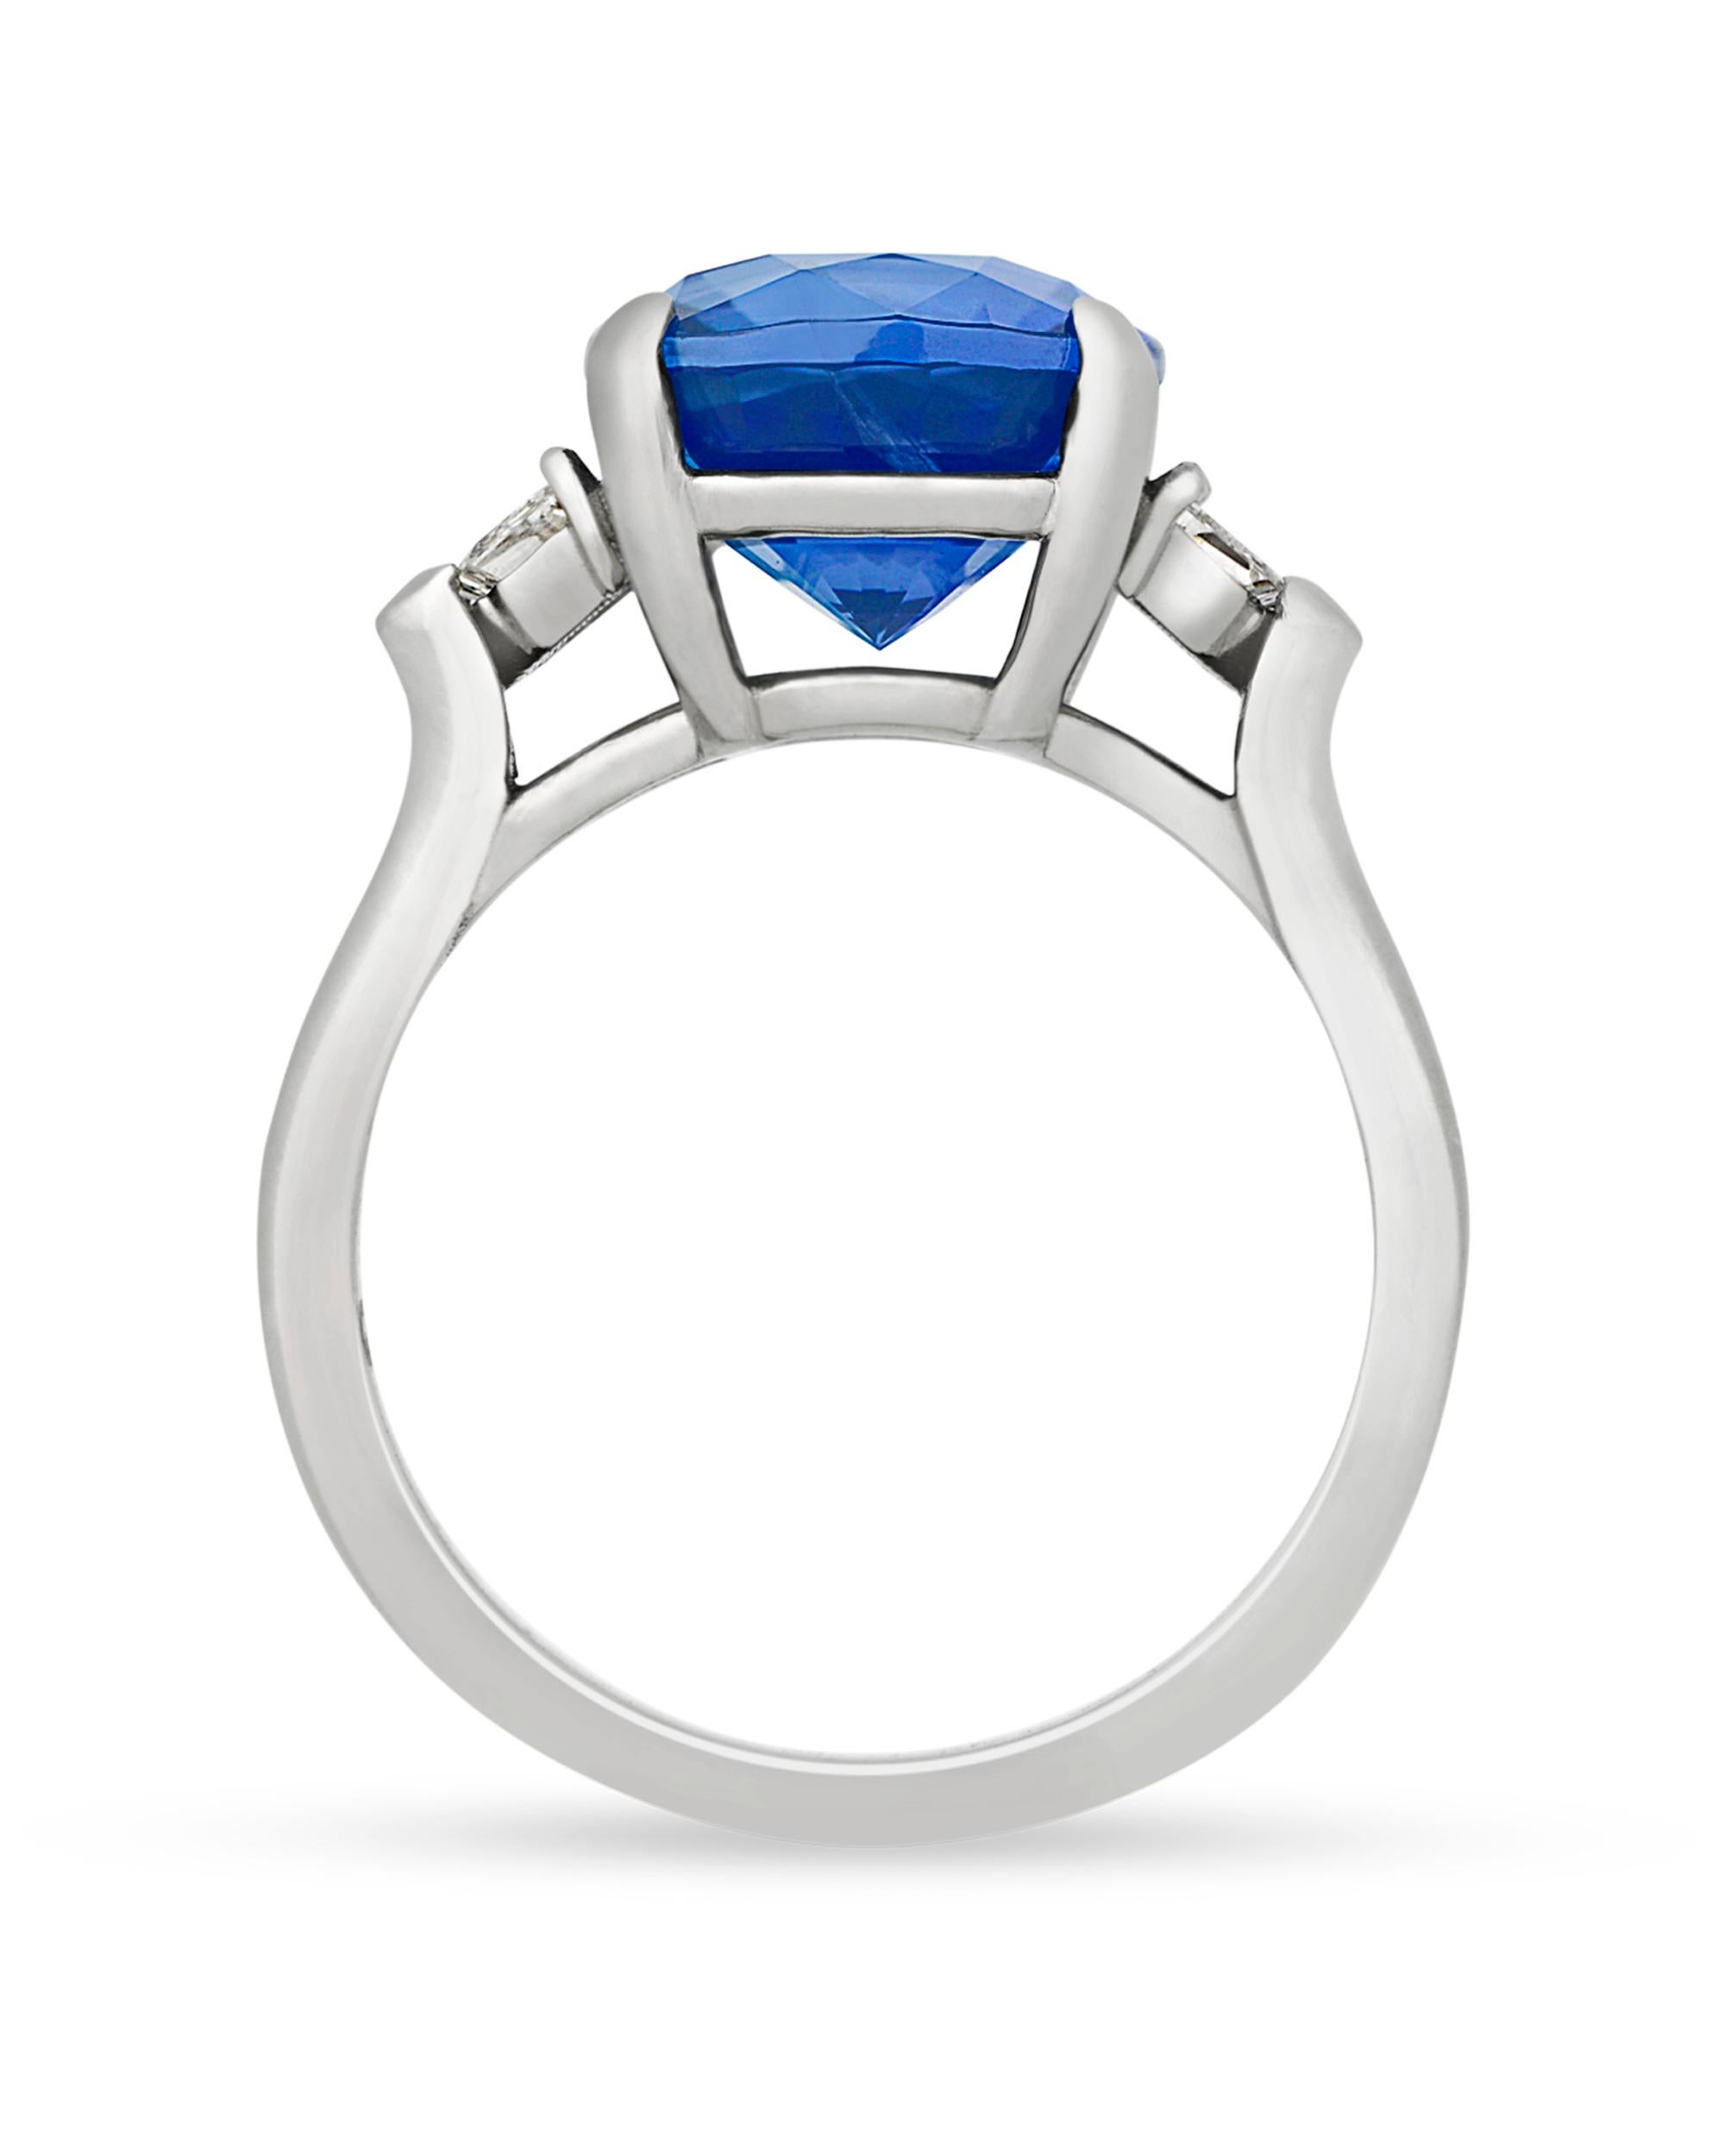 ceylon sapphire engagement ring